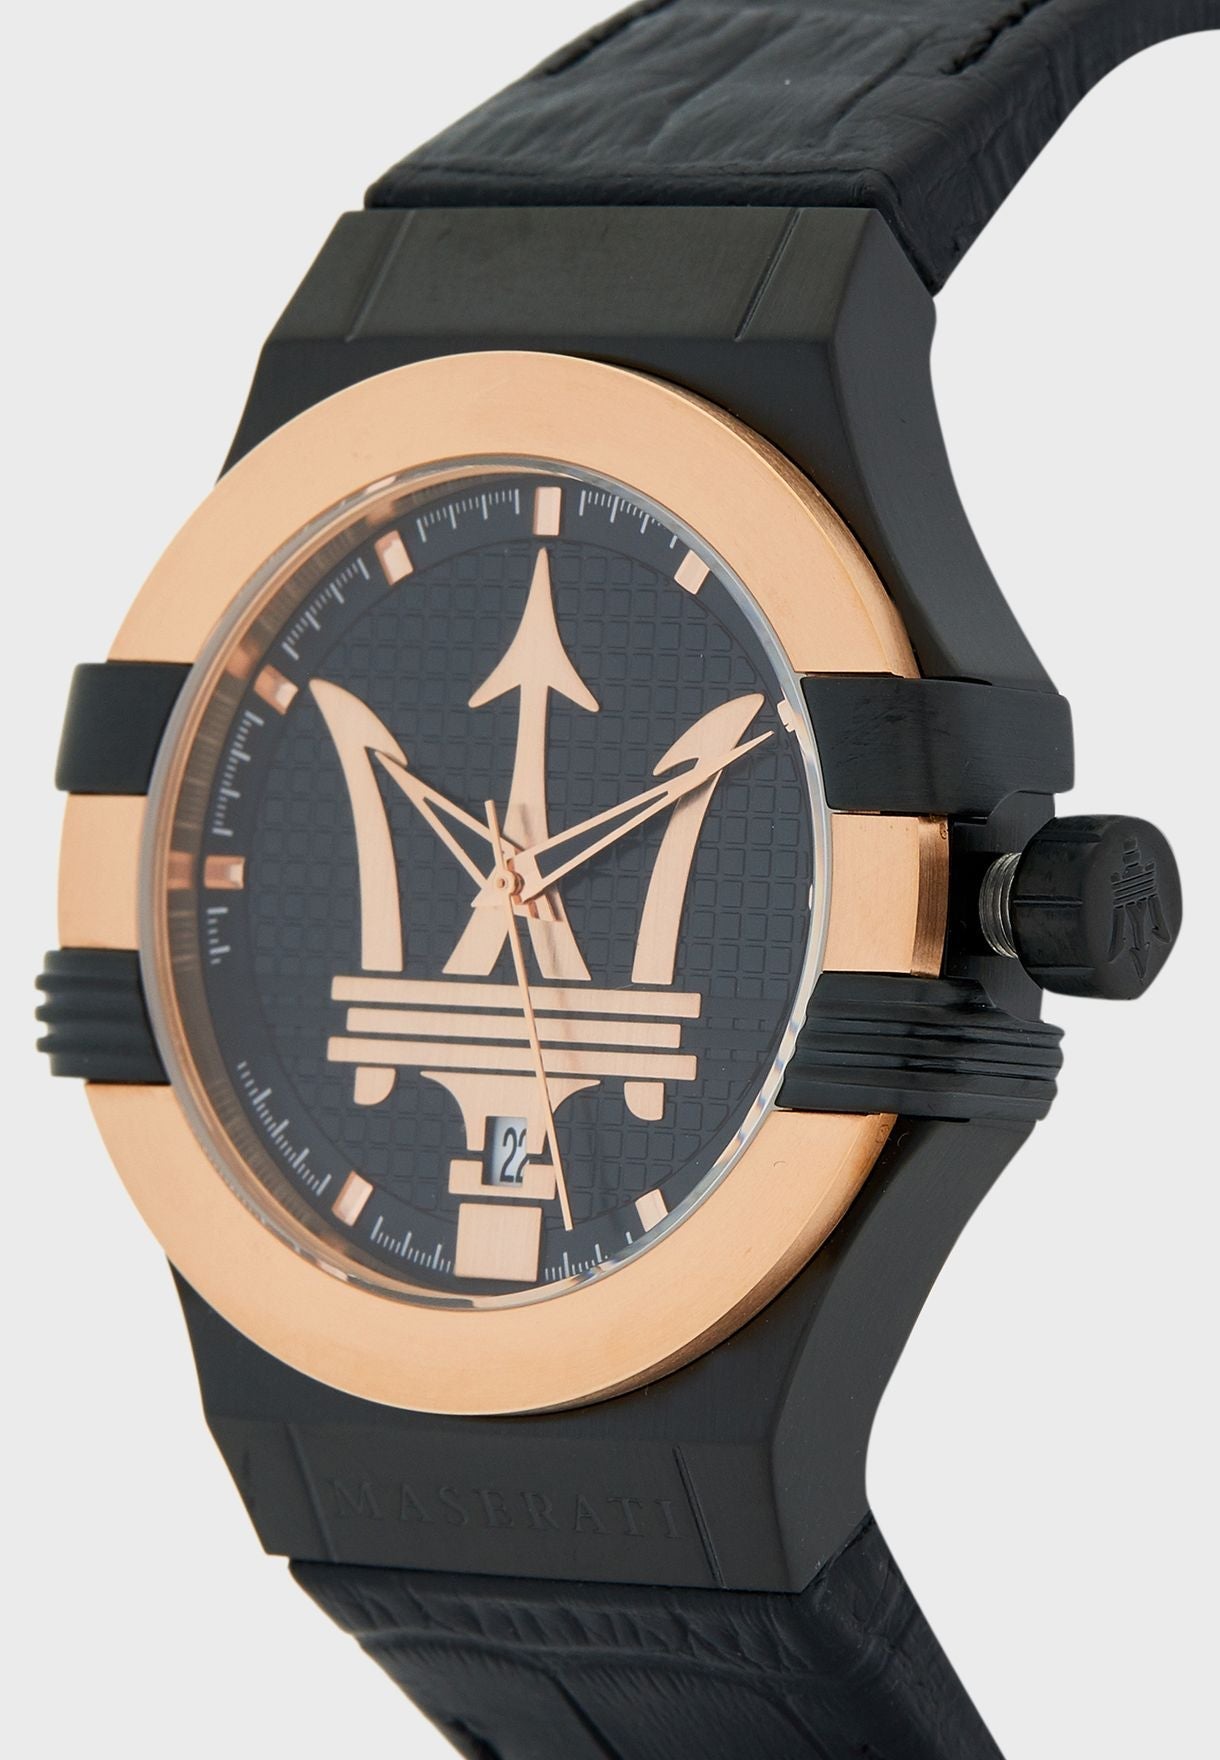 Maserati Potenza Quartz Black Dial Black Leather Strap Watch For Men - R8851108032